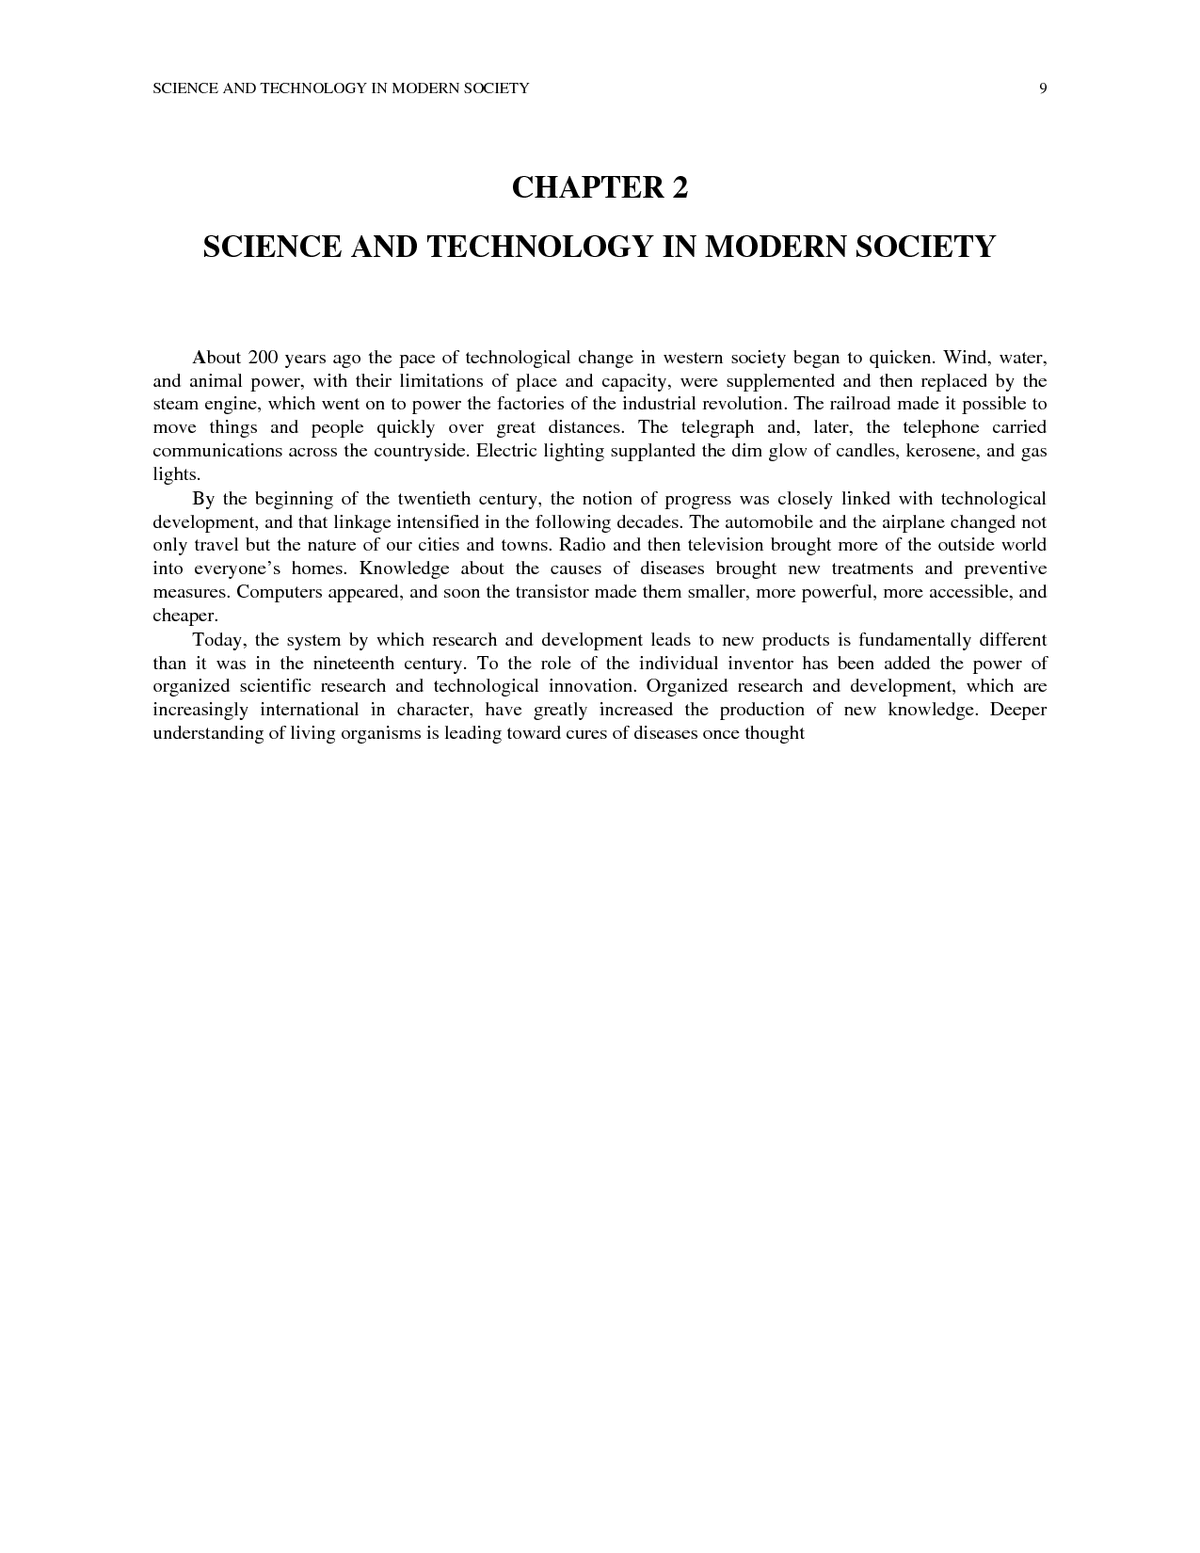 introduction modern technology essay